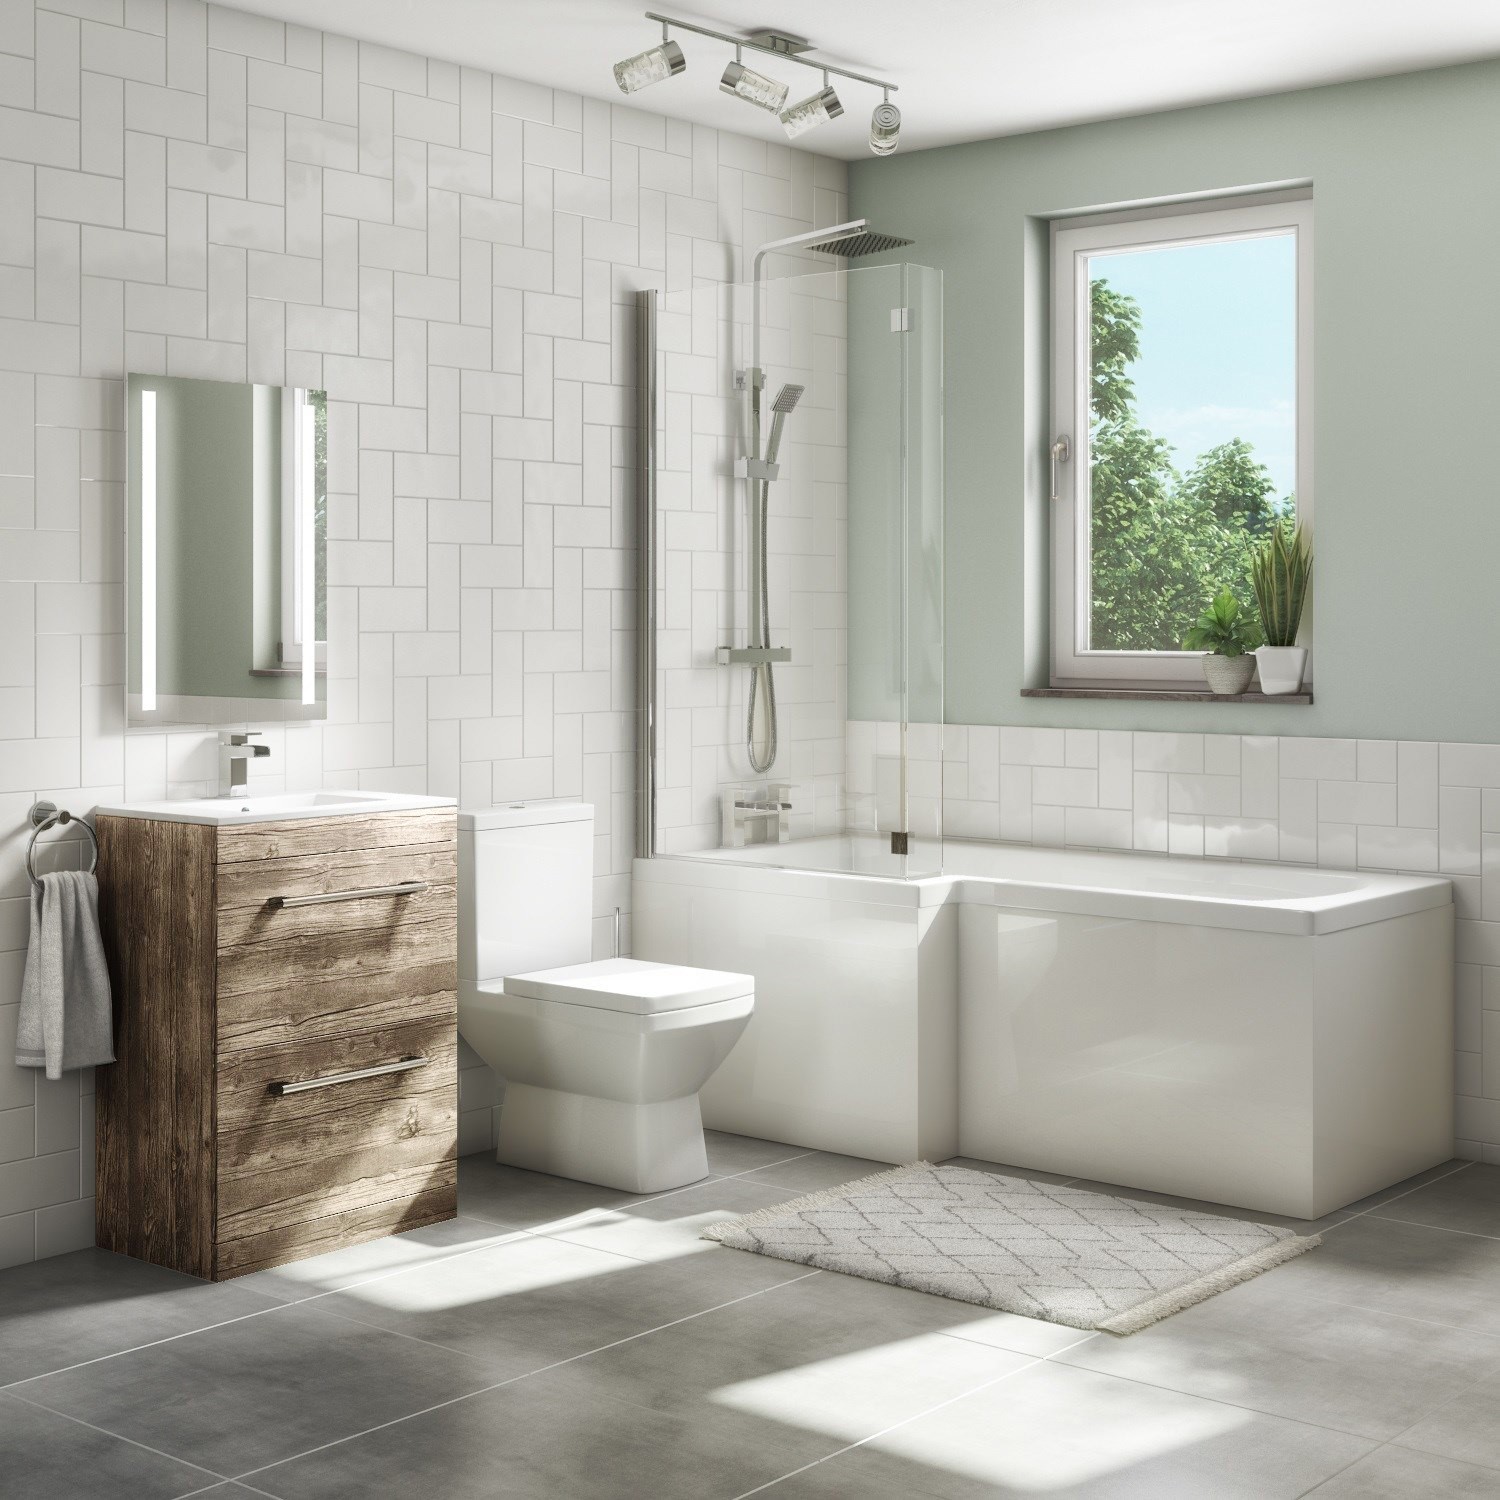 Bath Suite With 600mm Vanity Unit, L Shaped Bathroom Vanity Units